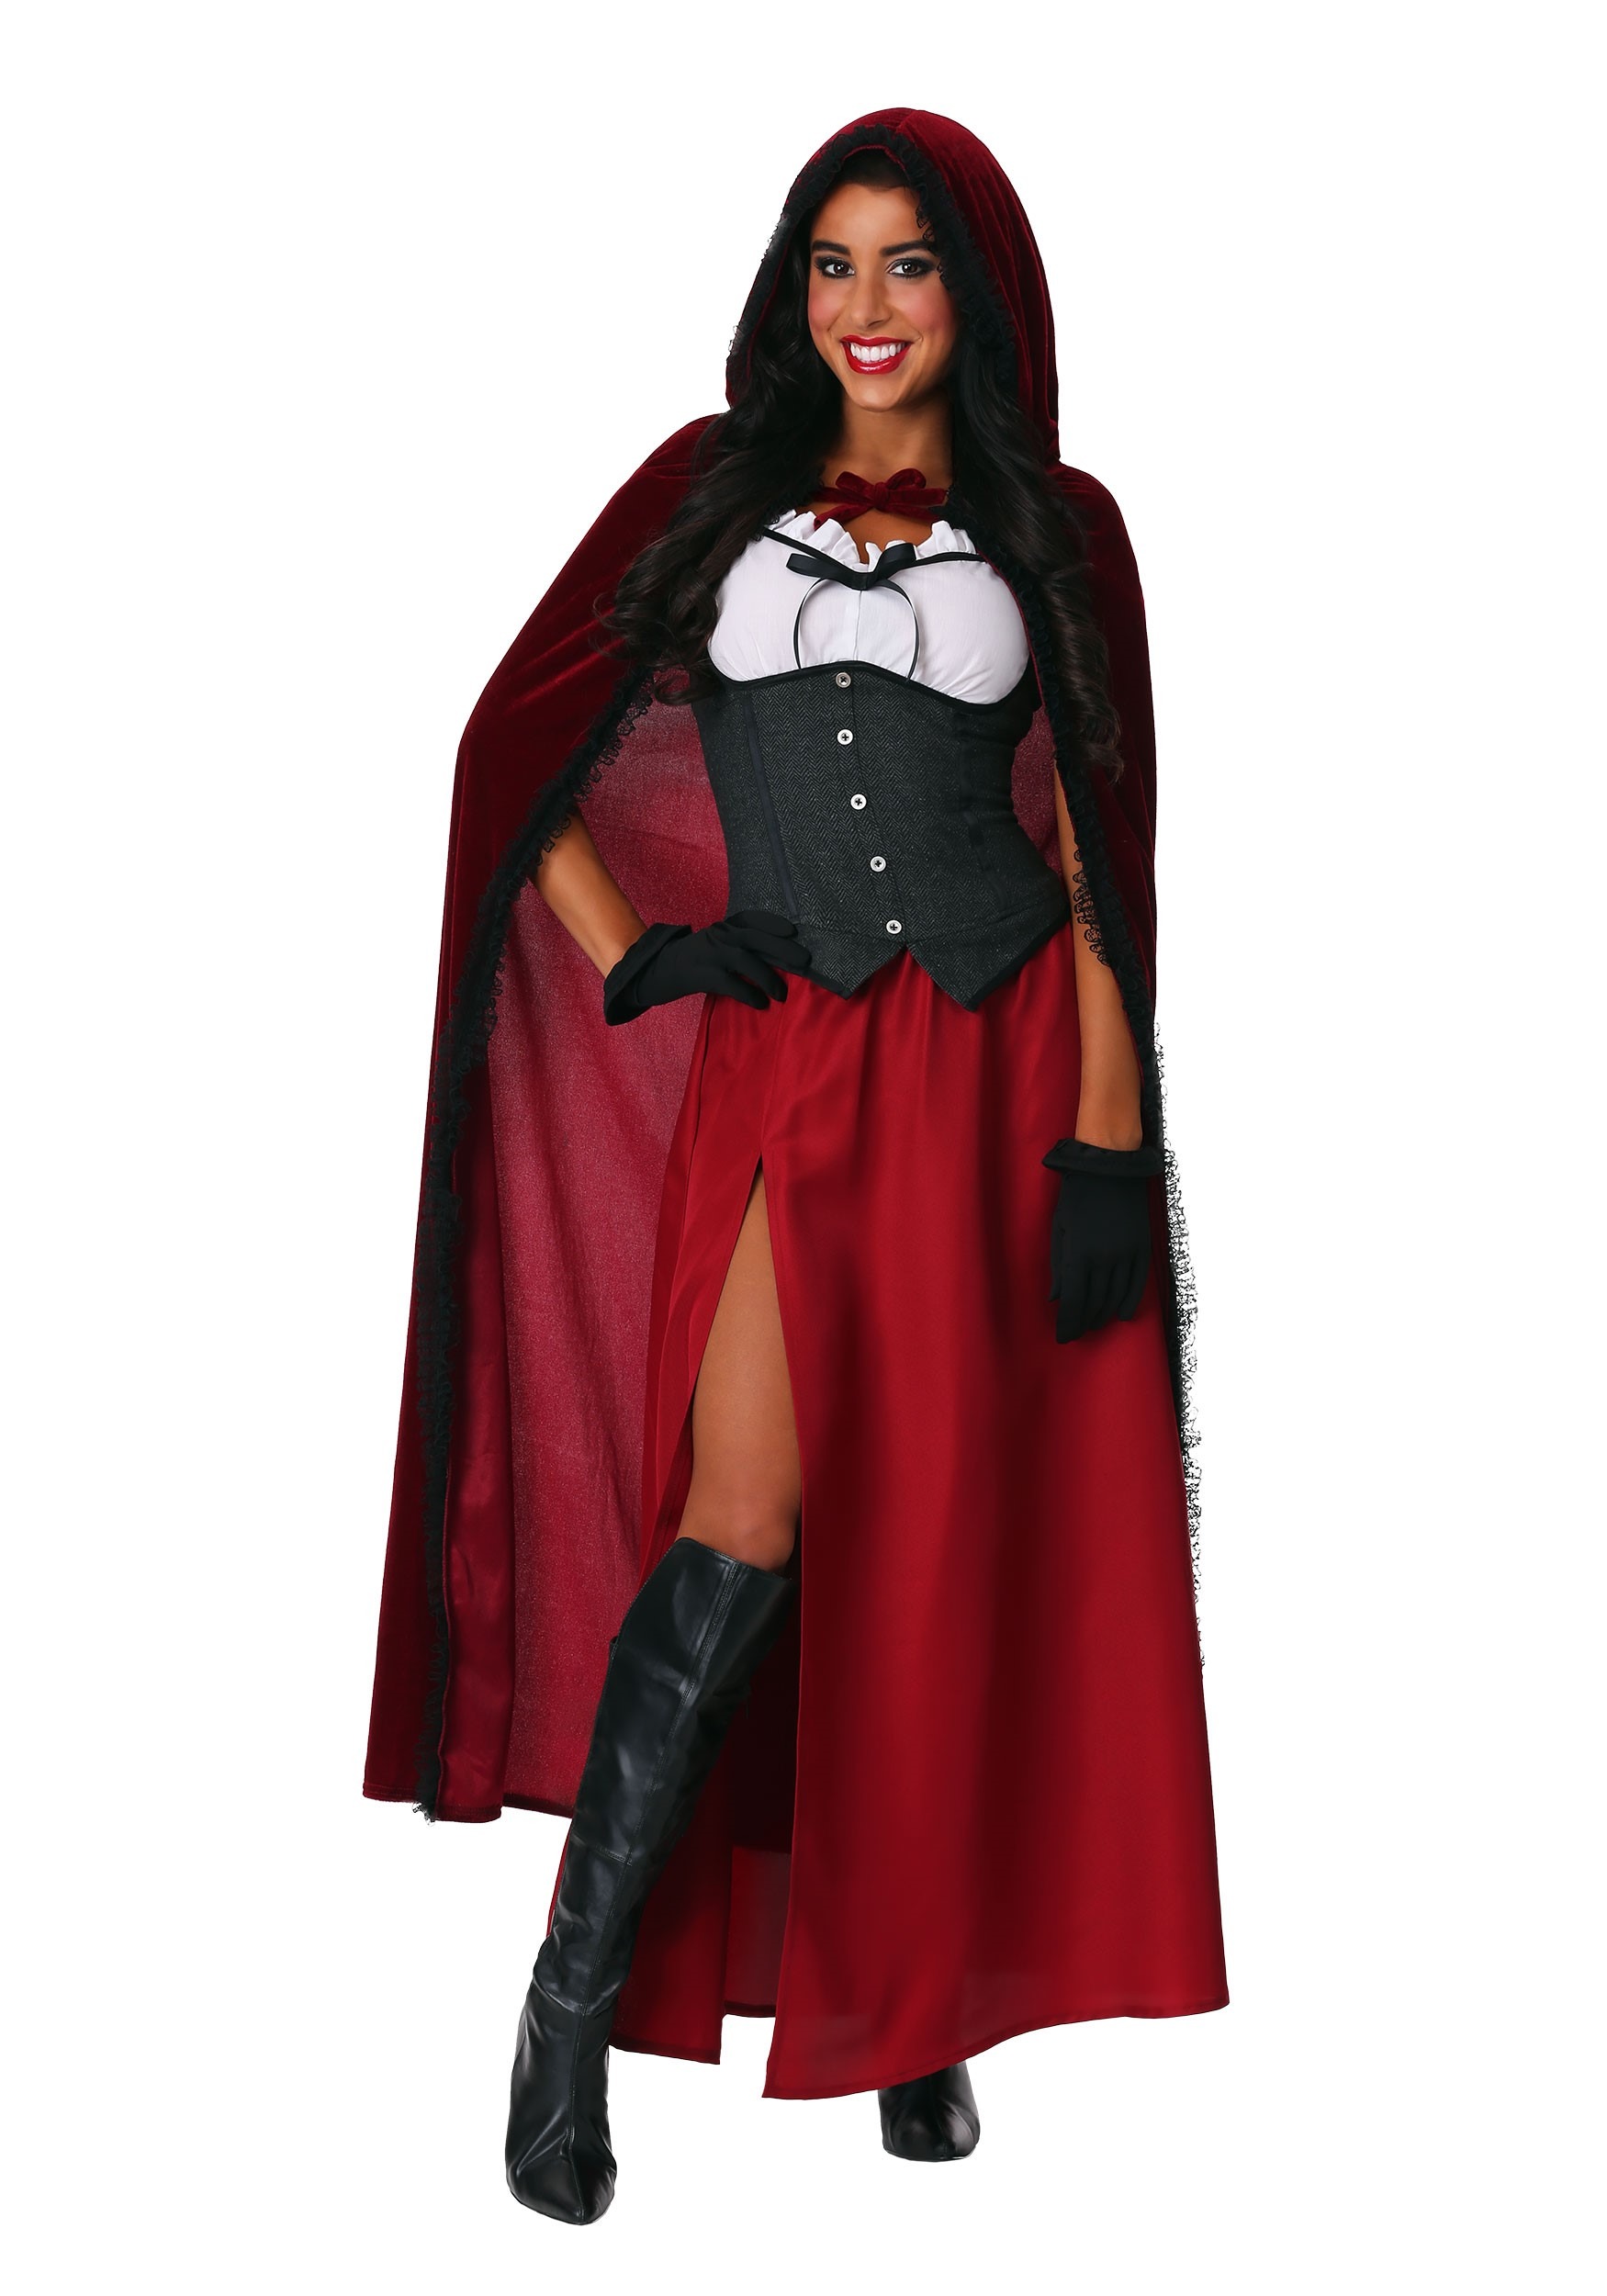 Ravishing Red Riding Hood Women's Fancy Dress Costume